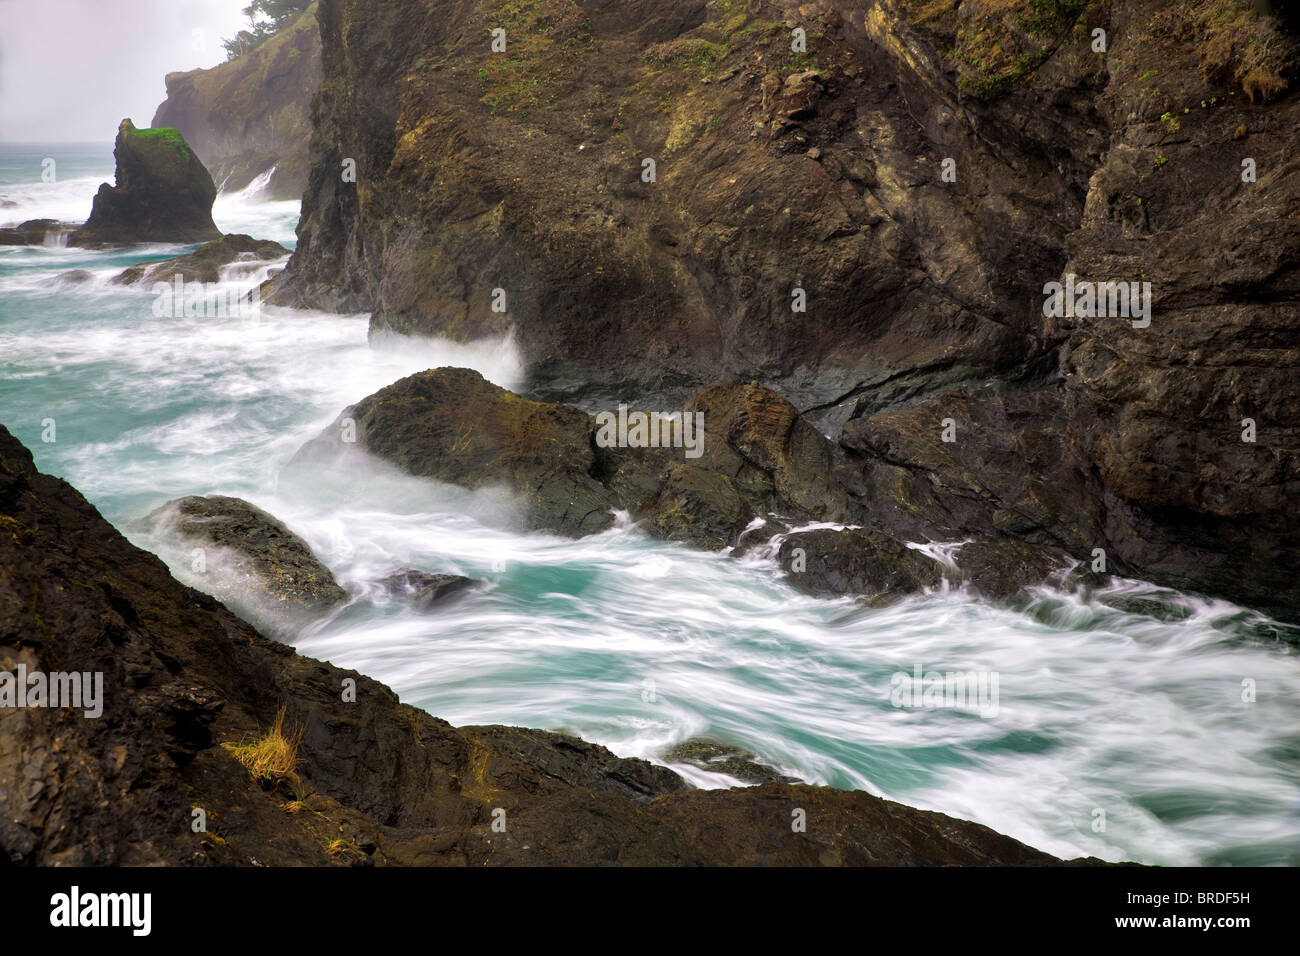 Wave action and rocky shoreline at Samuel H. Boardman State Scenic Corridor. Oregon Stock Photo